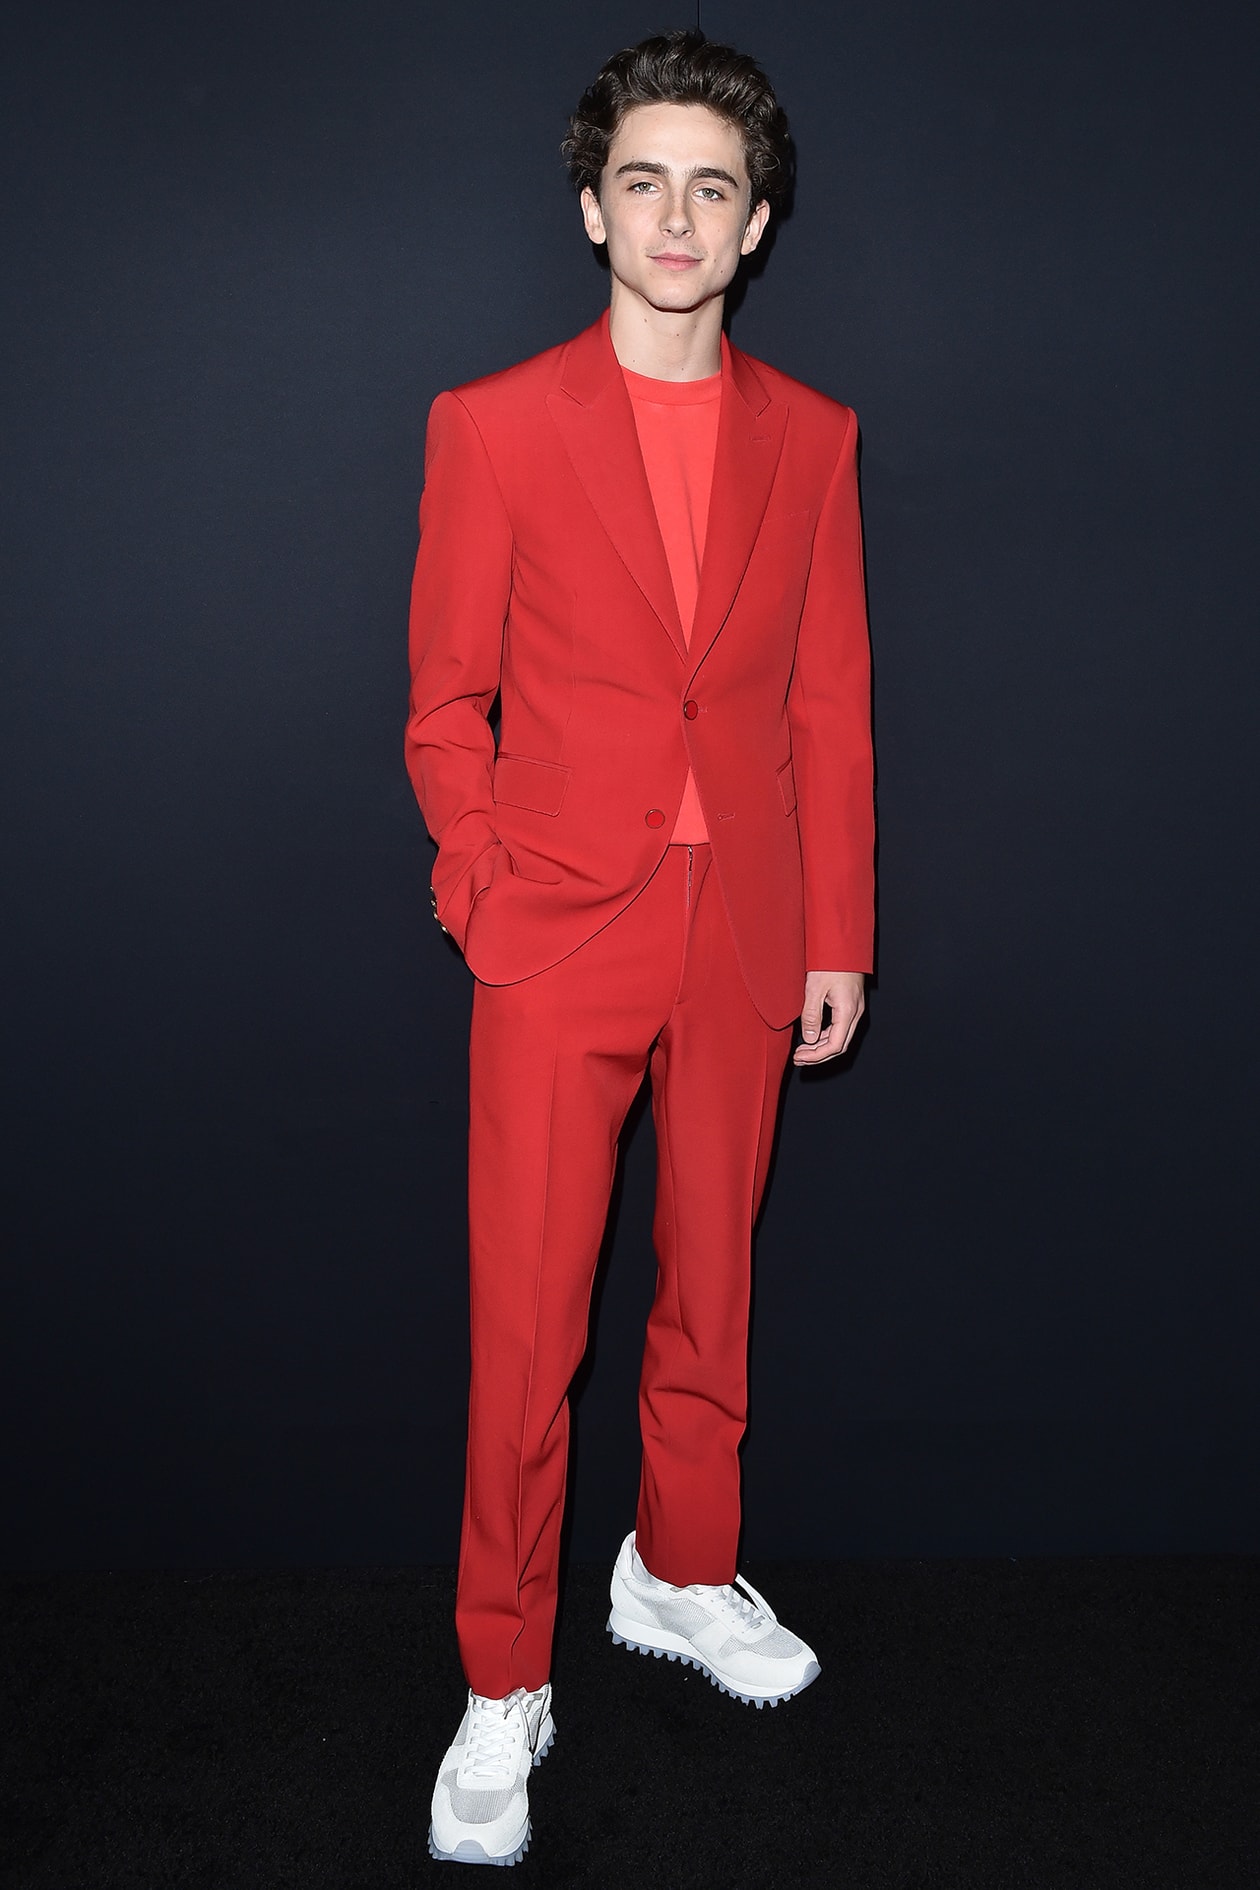 Timothee Chalamet Actor Berluti Menswear Fall/Winter 2018-2019 show Paris Fashion Week Suit Burgundy